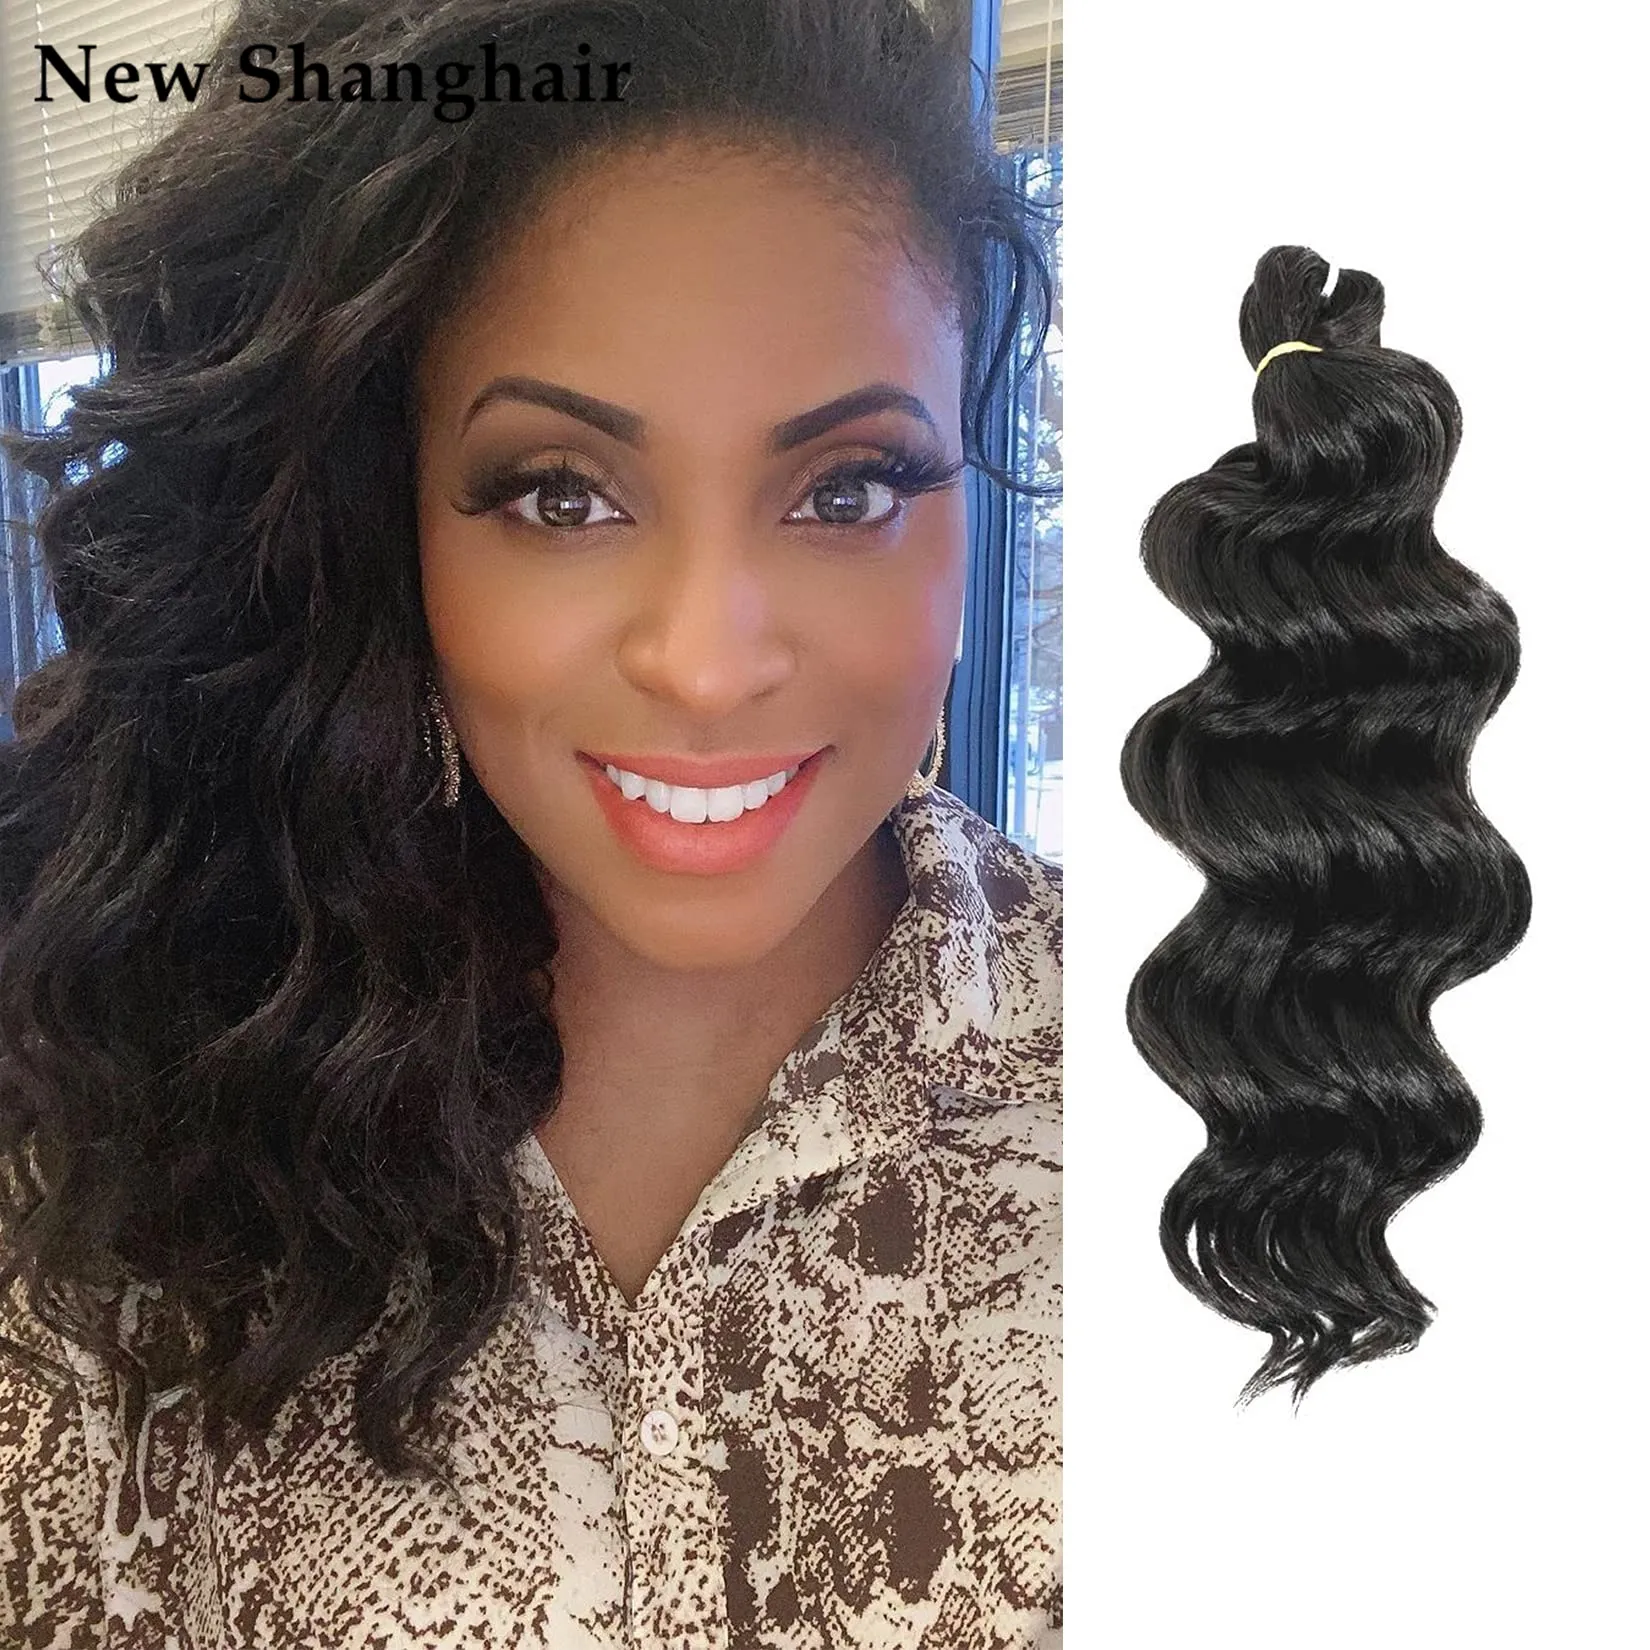 20 Inch Synthetic Deep Ocean Wave Crochet Hair Extension 80g/pcs for Black Women Braiding BS03